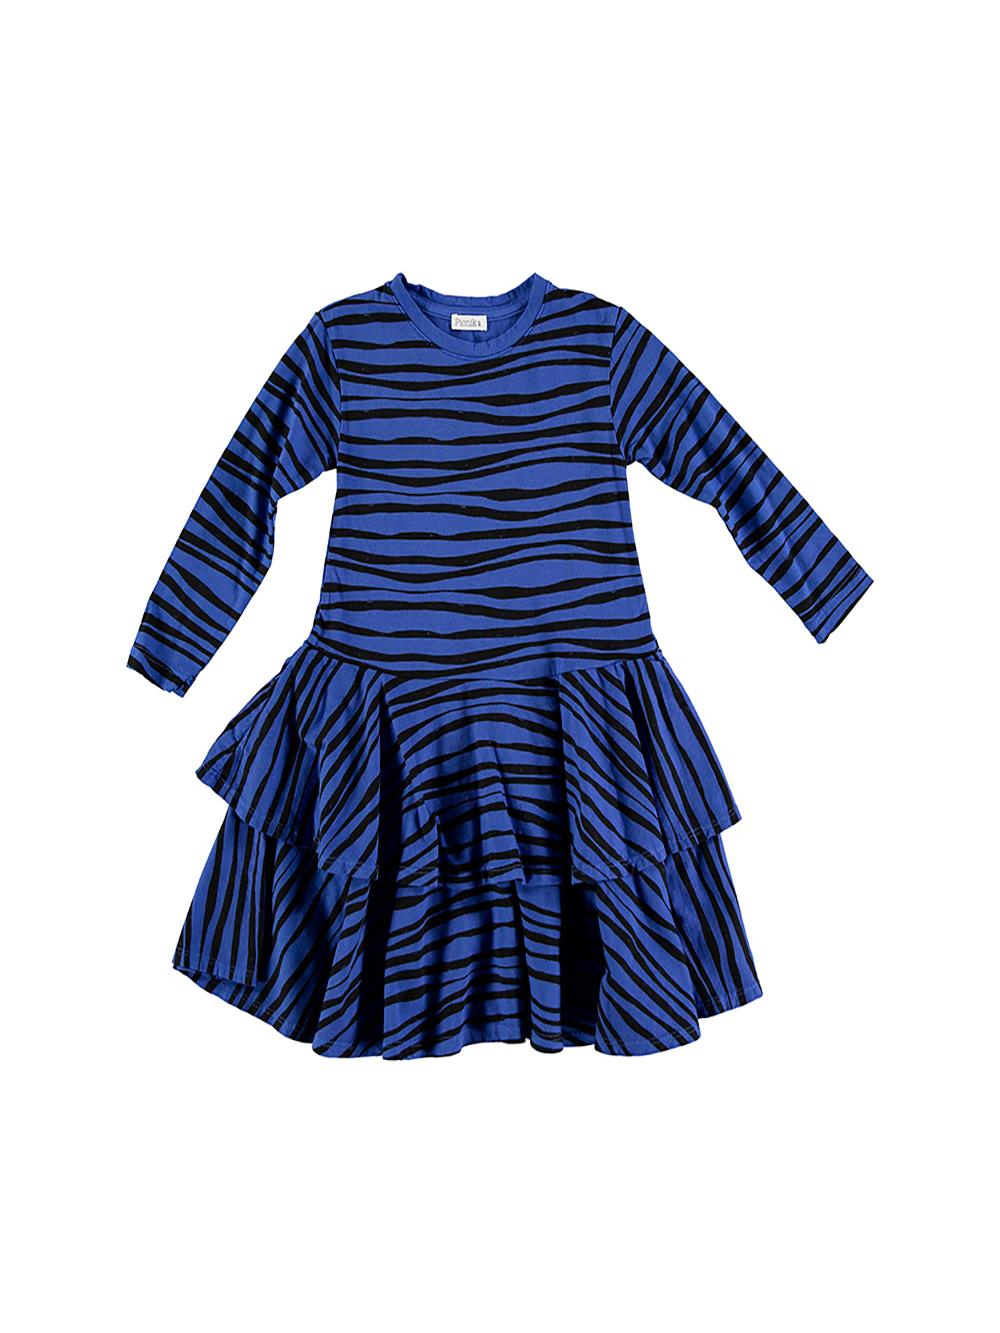 ELECTRIC BLUE ZEBRA PRINT DOUBLE Ruffle Dress